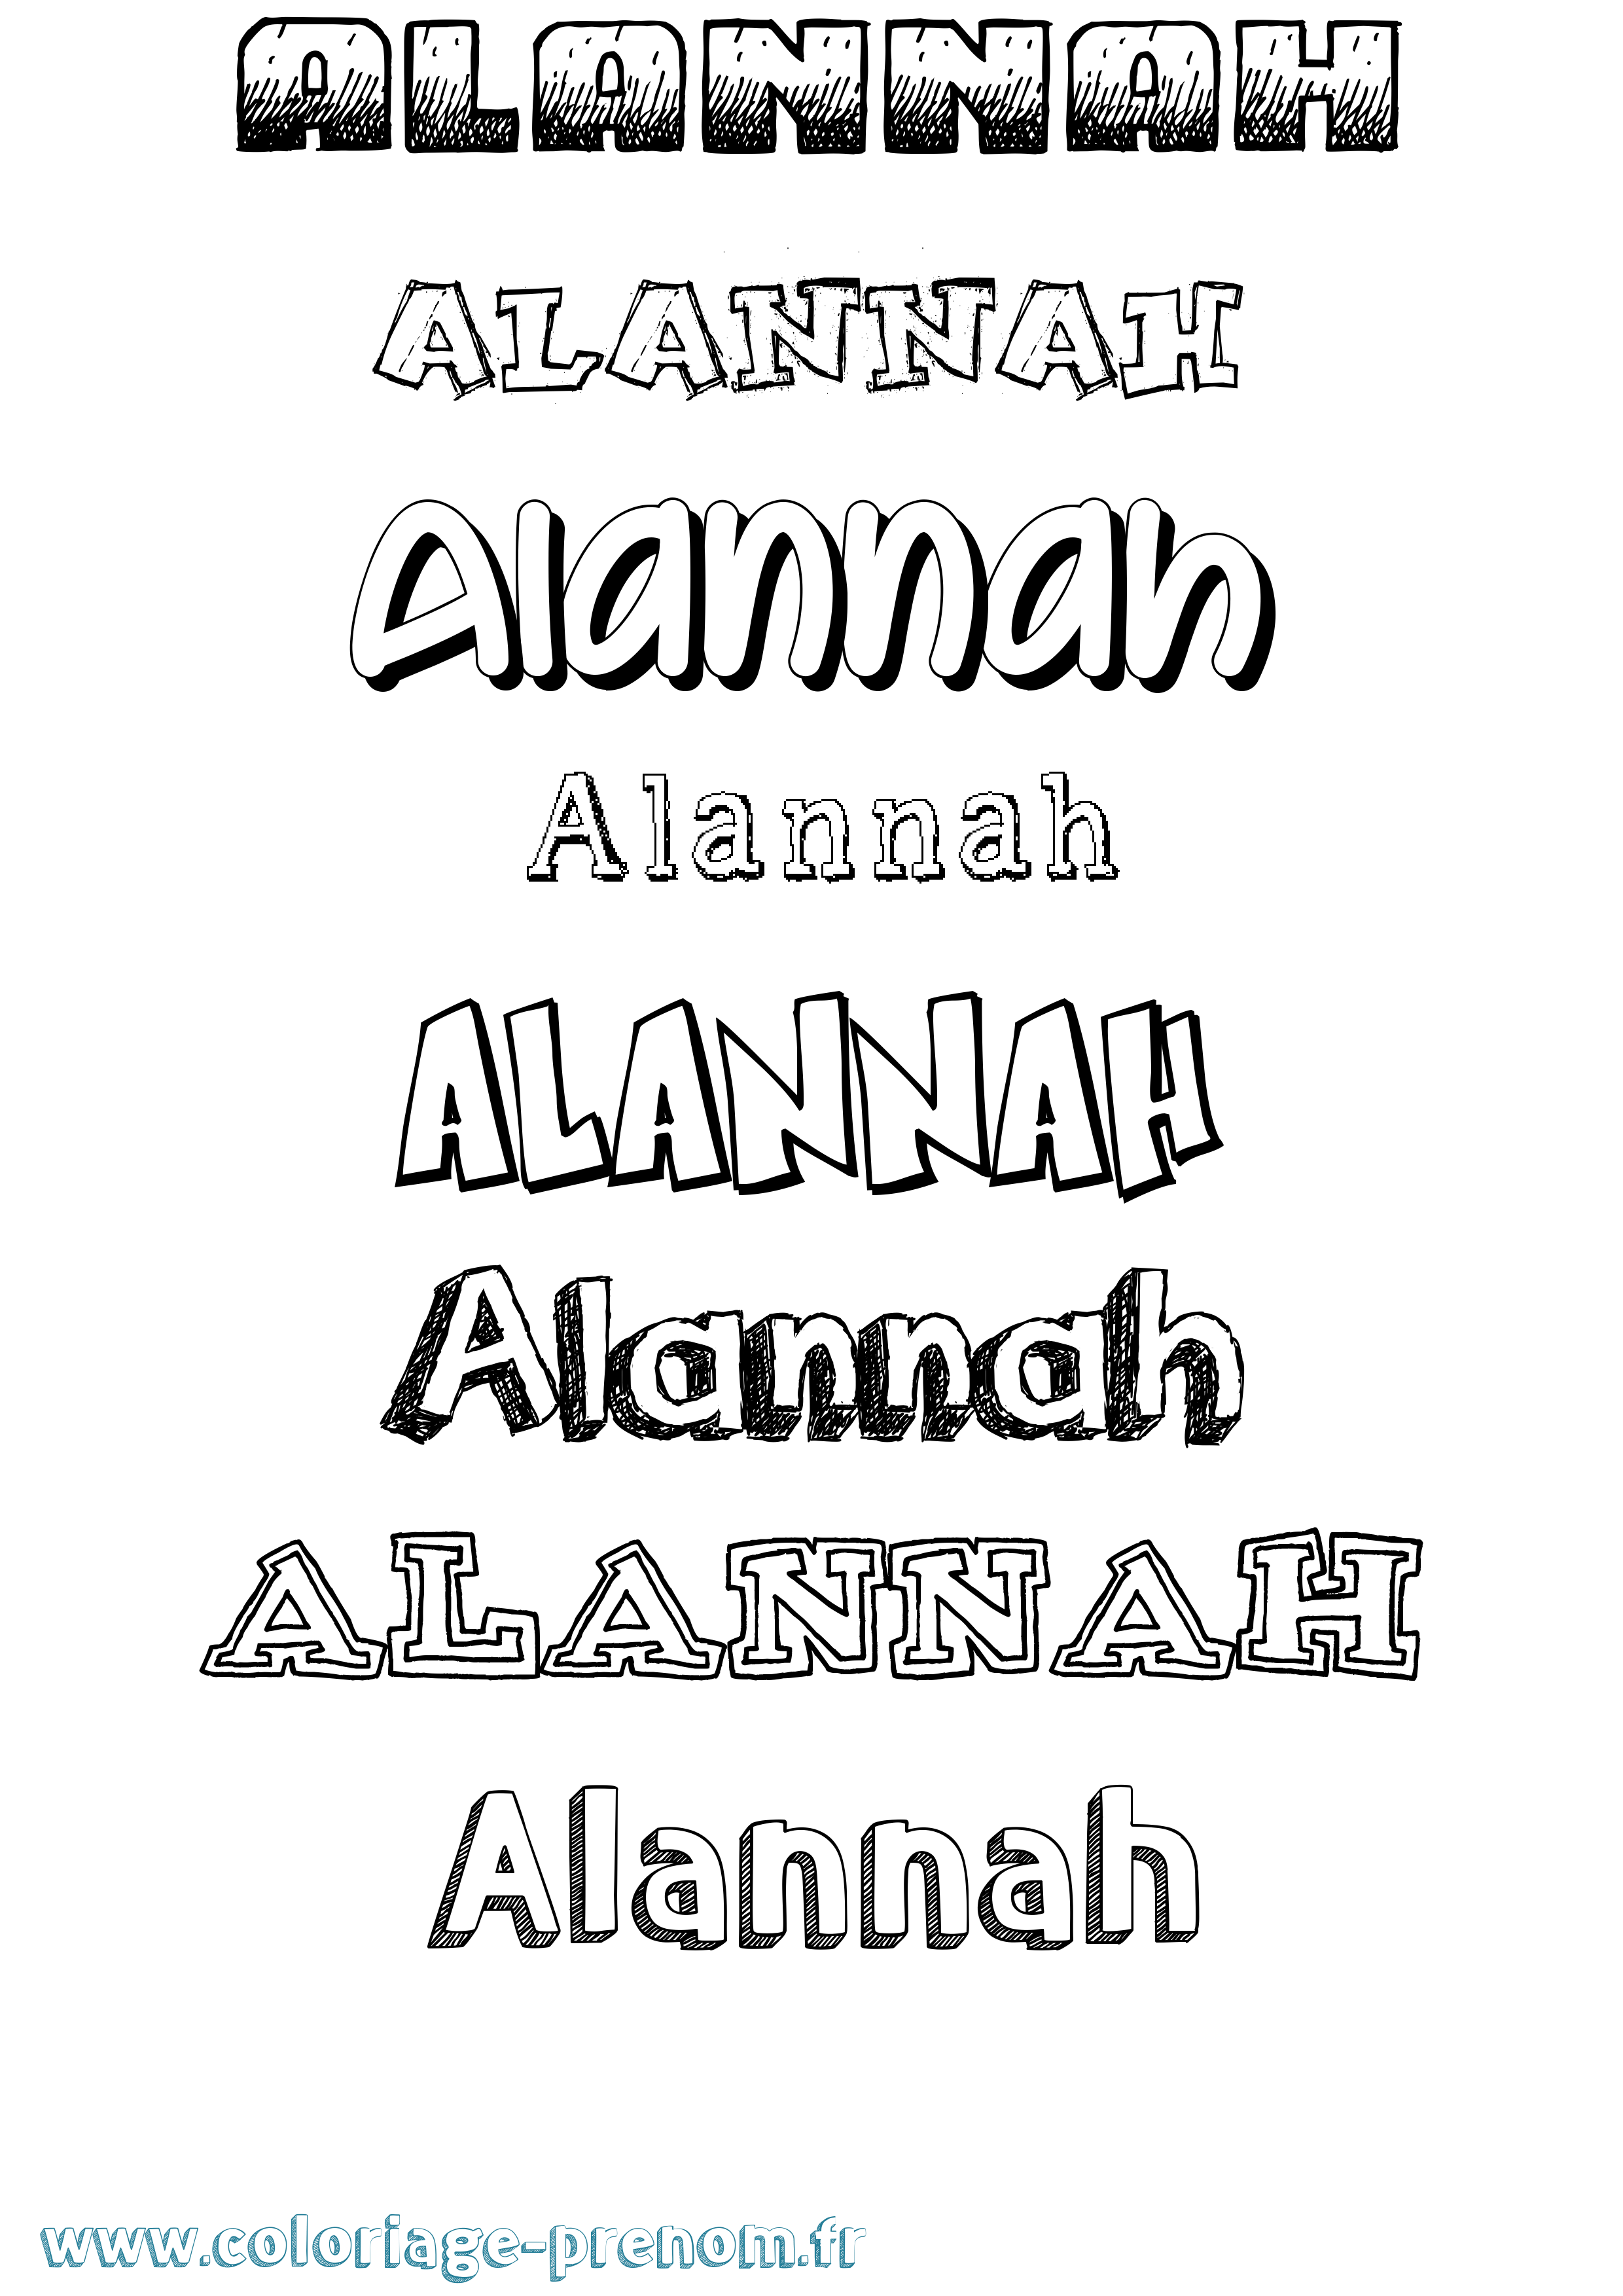 Coloriage prénom Alannah Dessiné